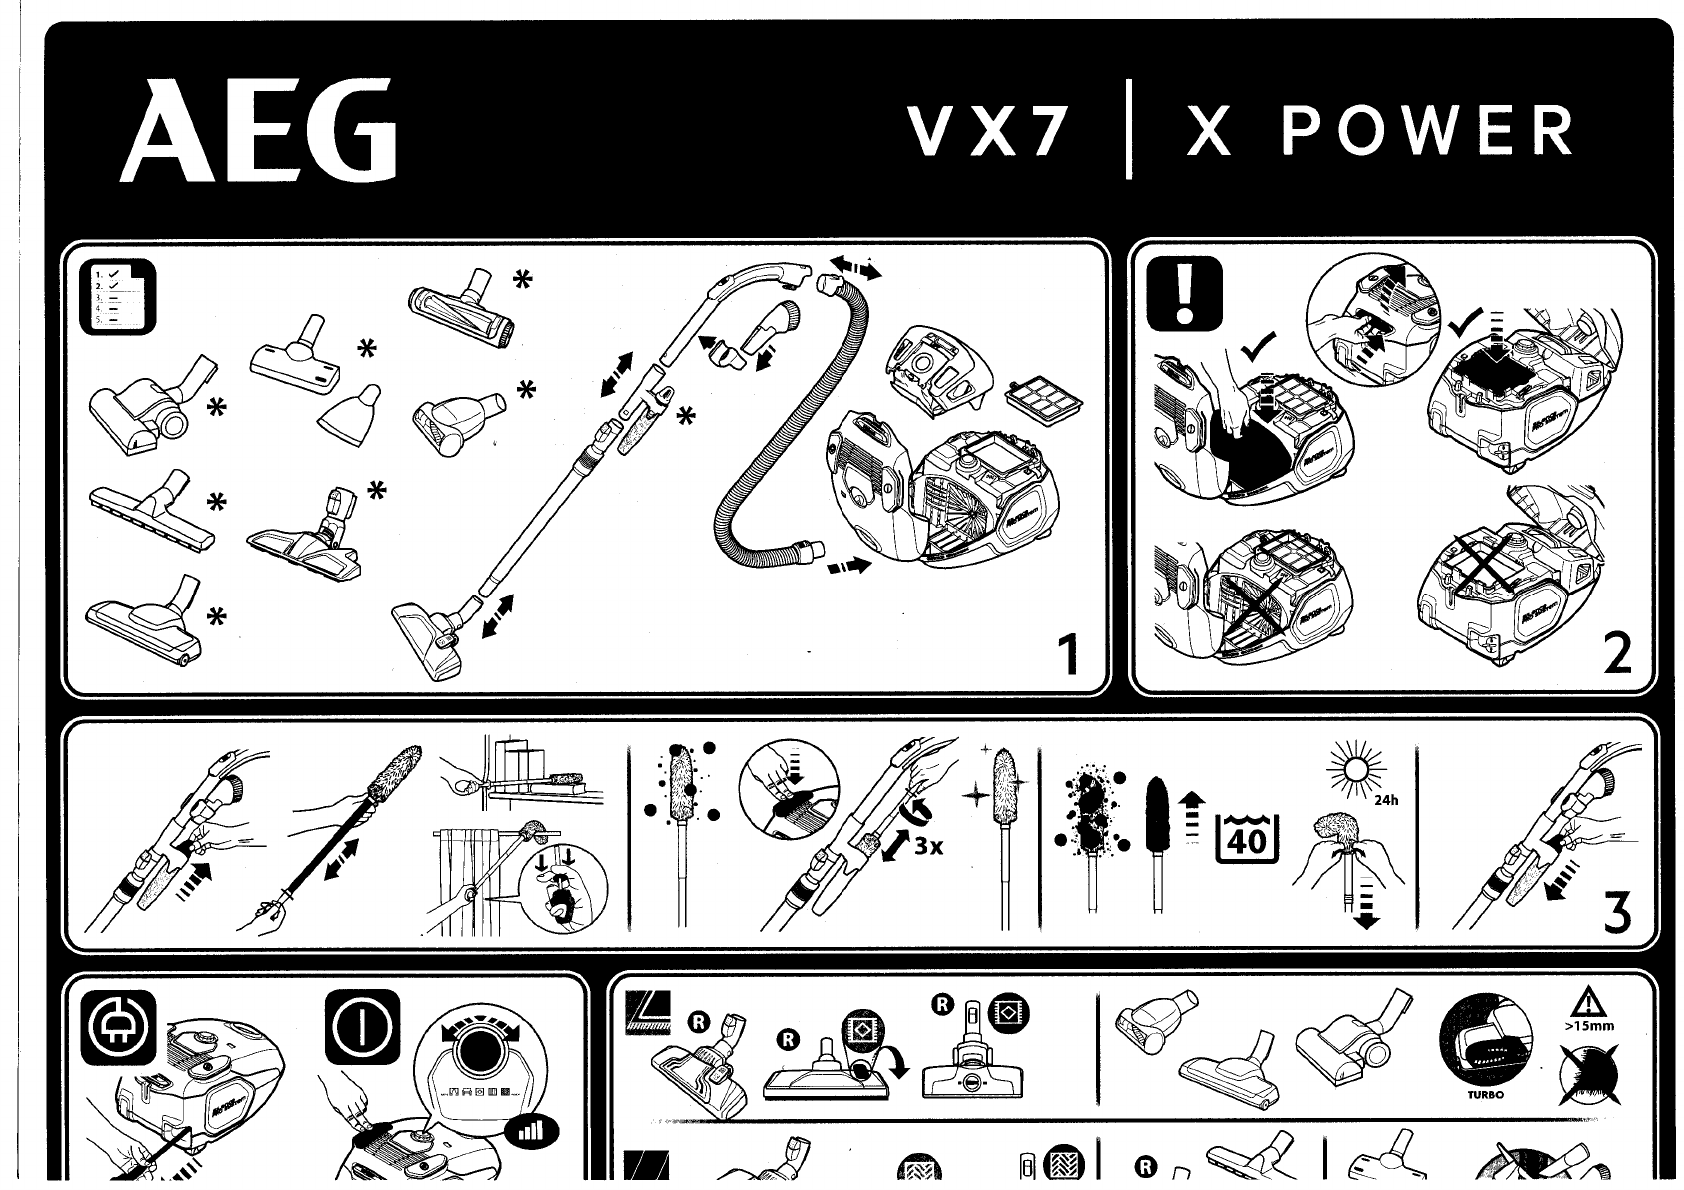 voorzien Bij Staat Manual AEG VX7-1 (page 1 of 2) (English, German, Dutch, French, Italian,  Spanish)